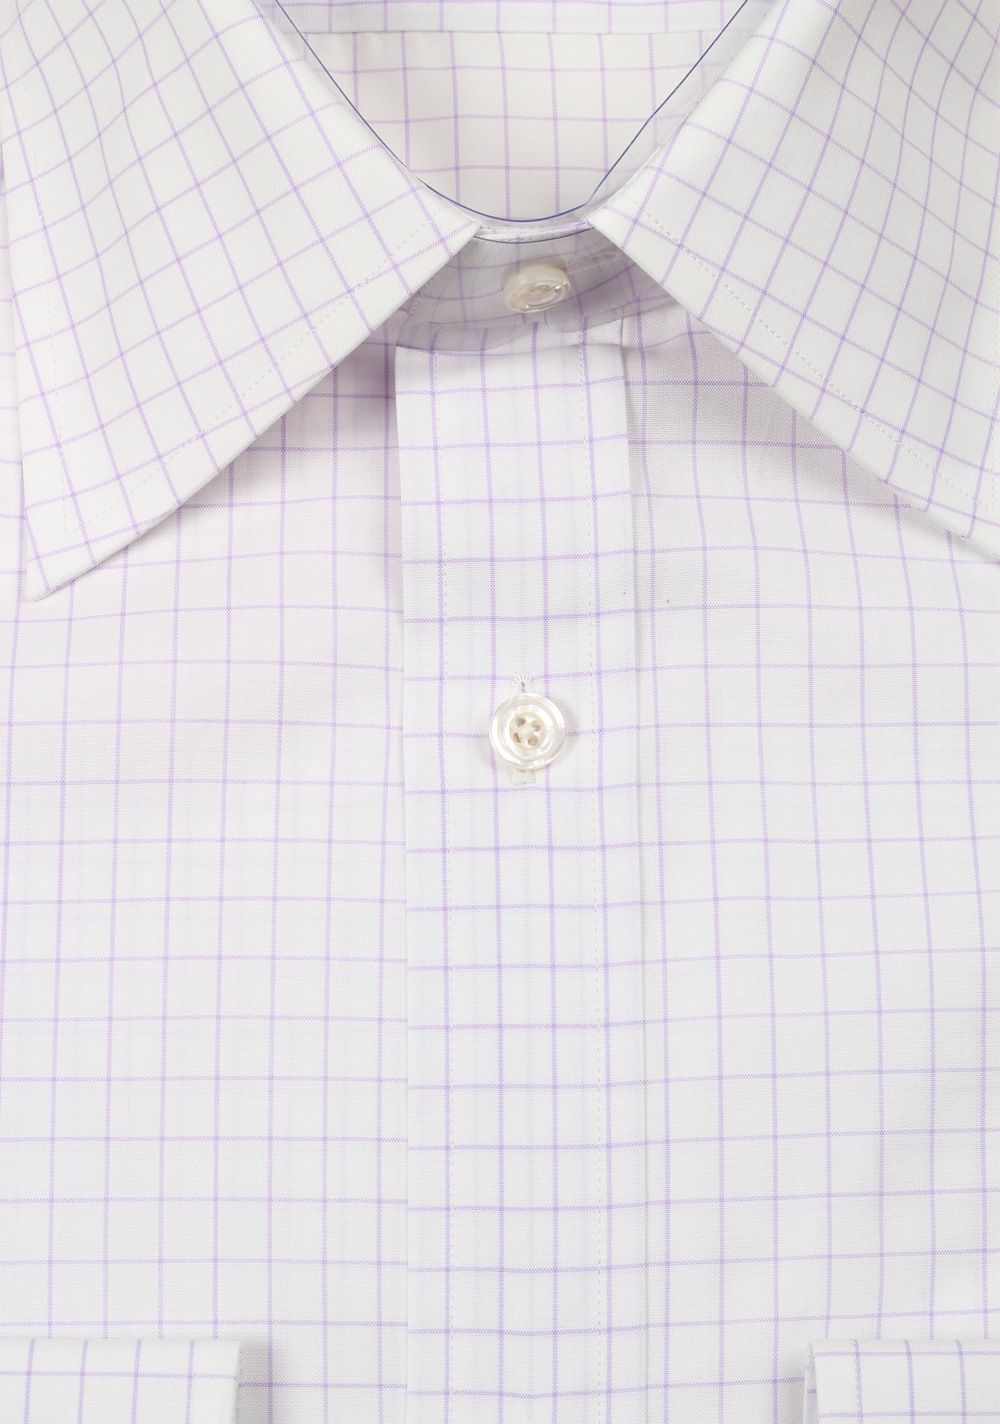 TOM FORD Checked White Lilac Dress Shirt Size 40 / 15,75 U.S. | Costume Limité